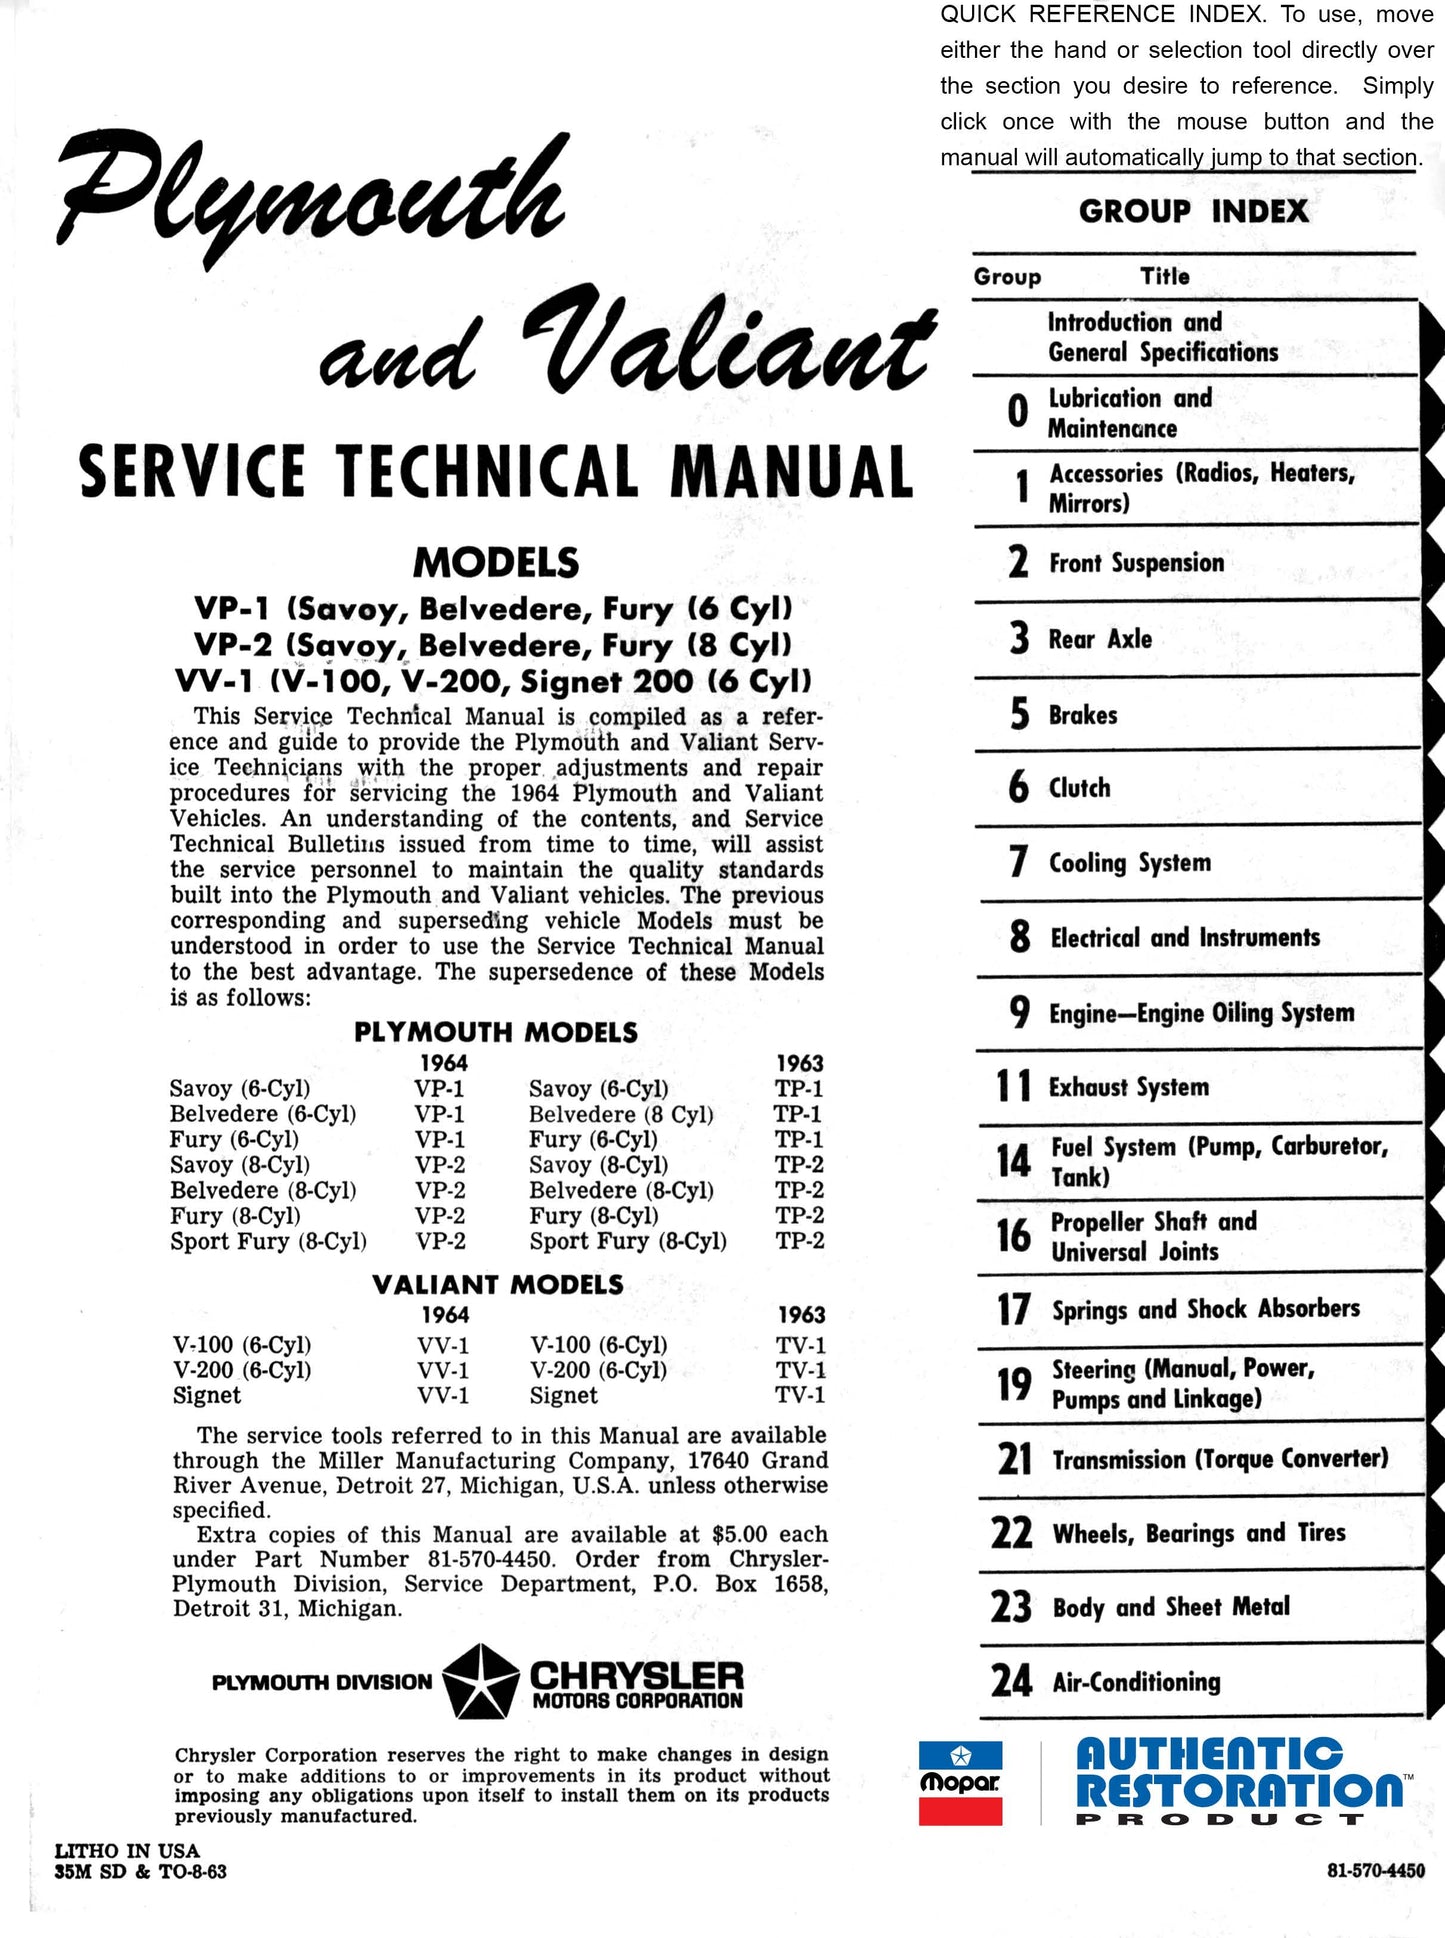 1964 Plymouth - Shop Manual